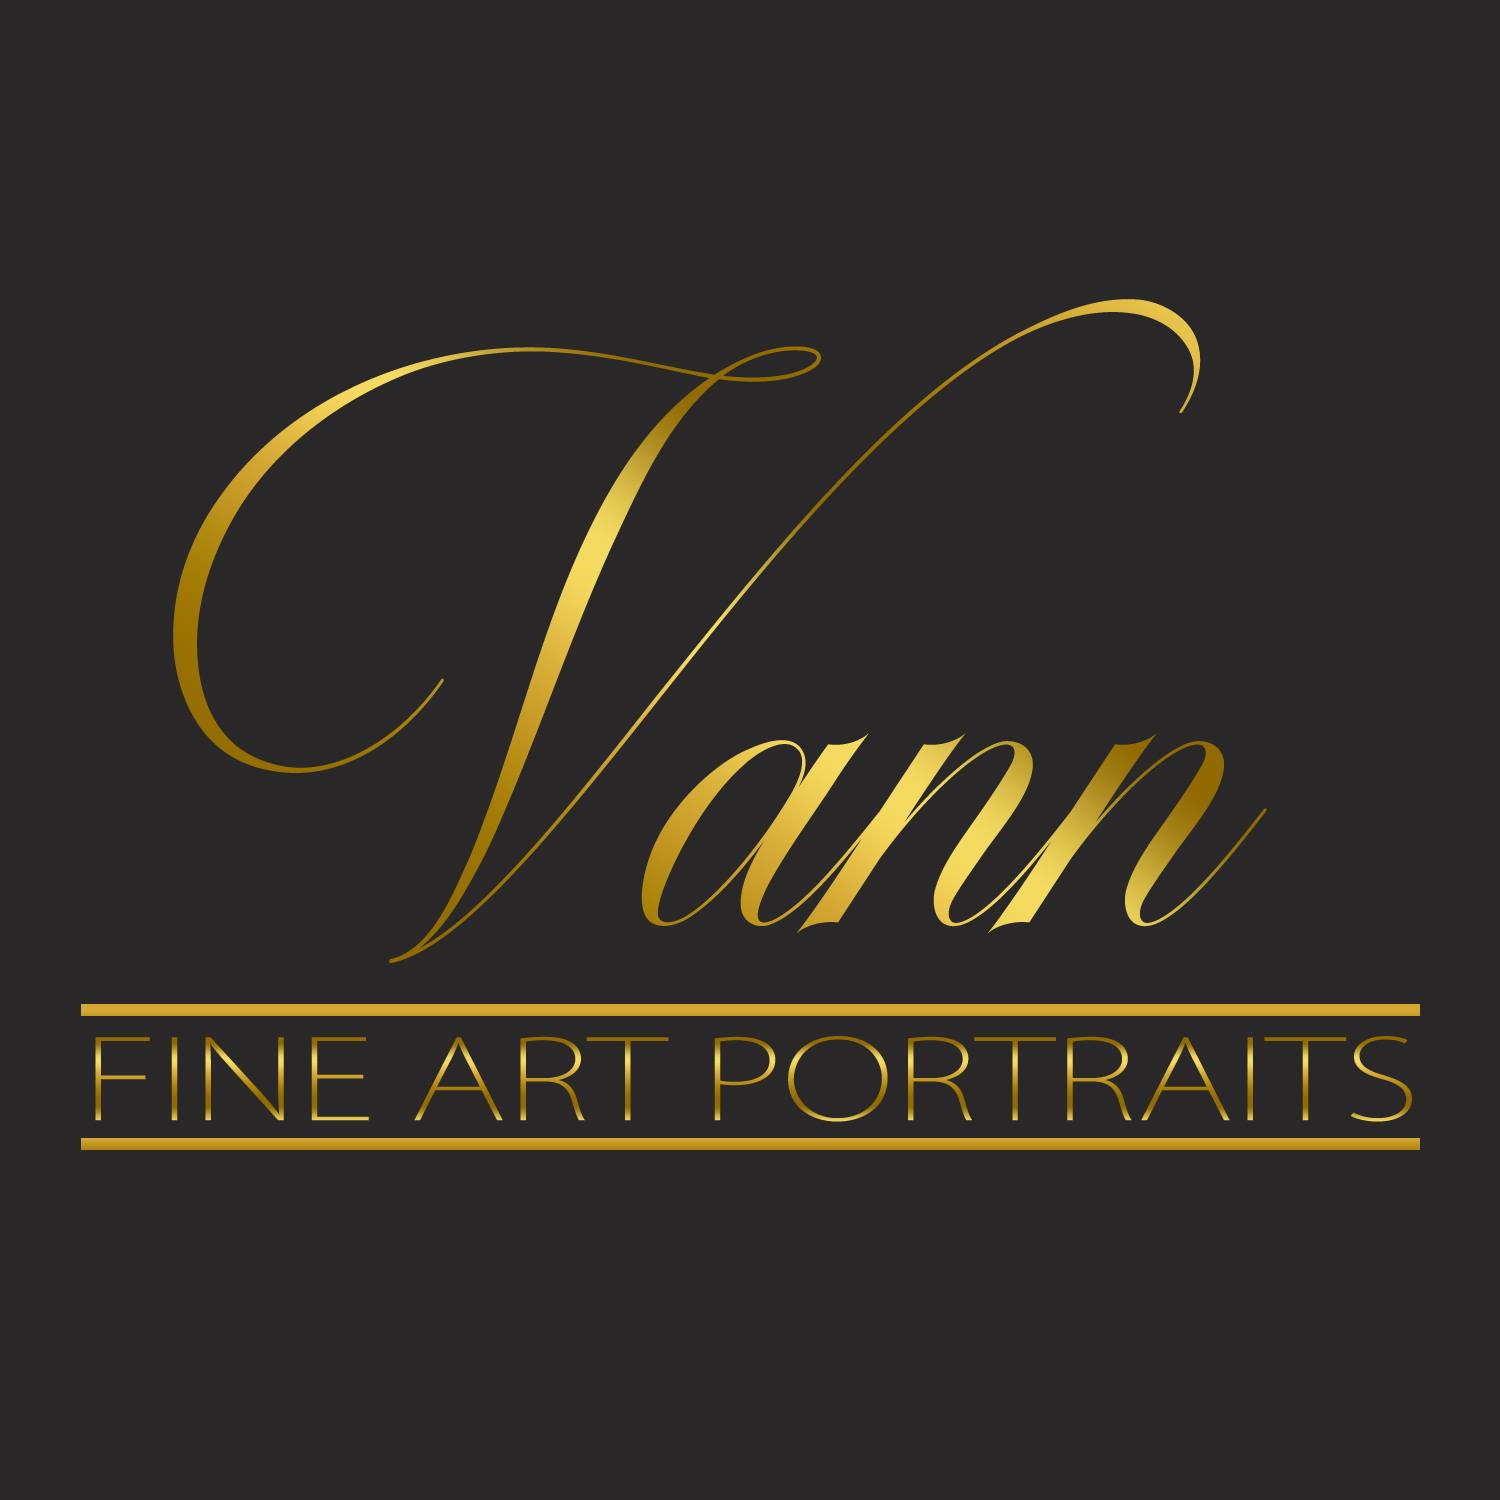 Vann Fine Art Portraits